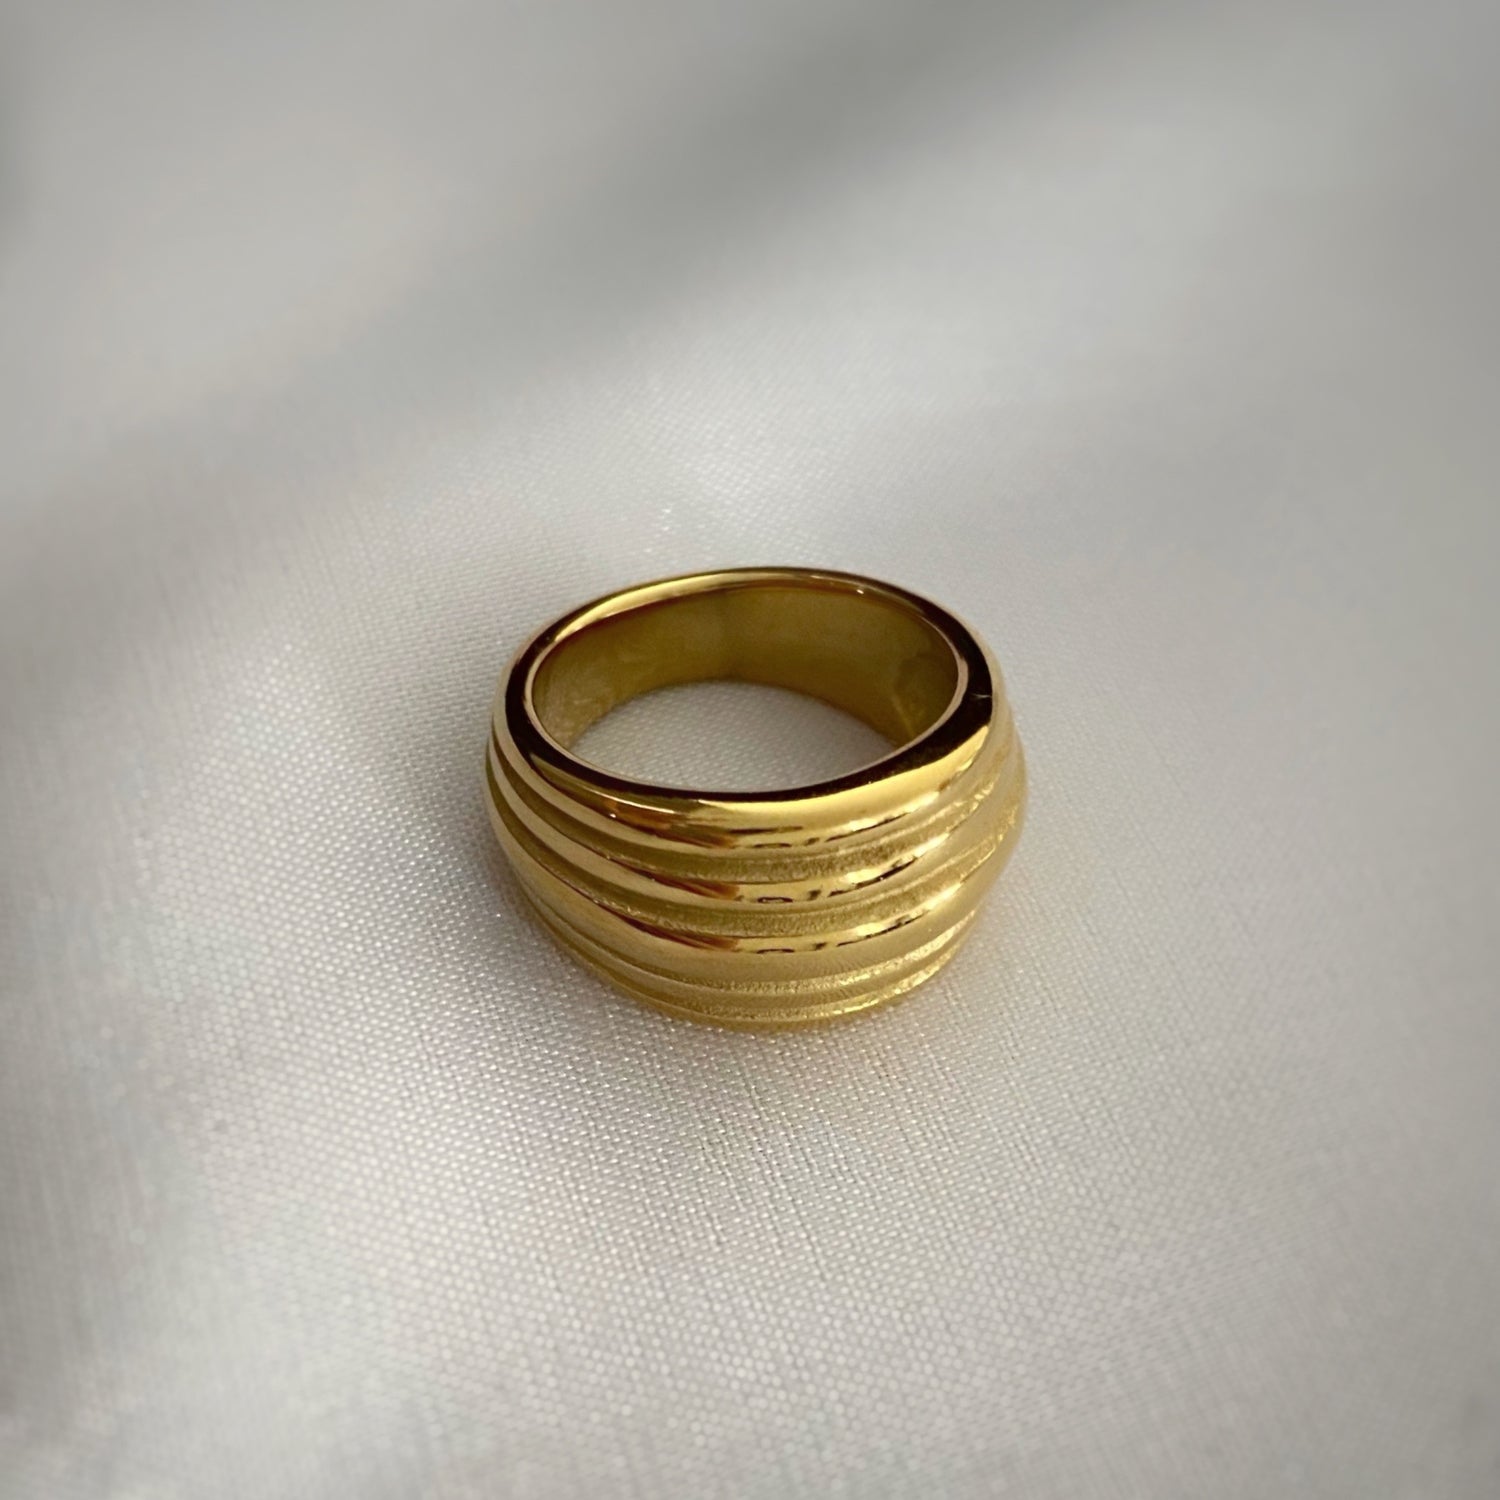 Belgium jewelry , water resistant ring, perfect as christmas gift , bague, livraison de Belgique , cadeau de Noel